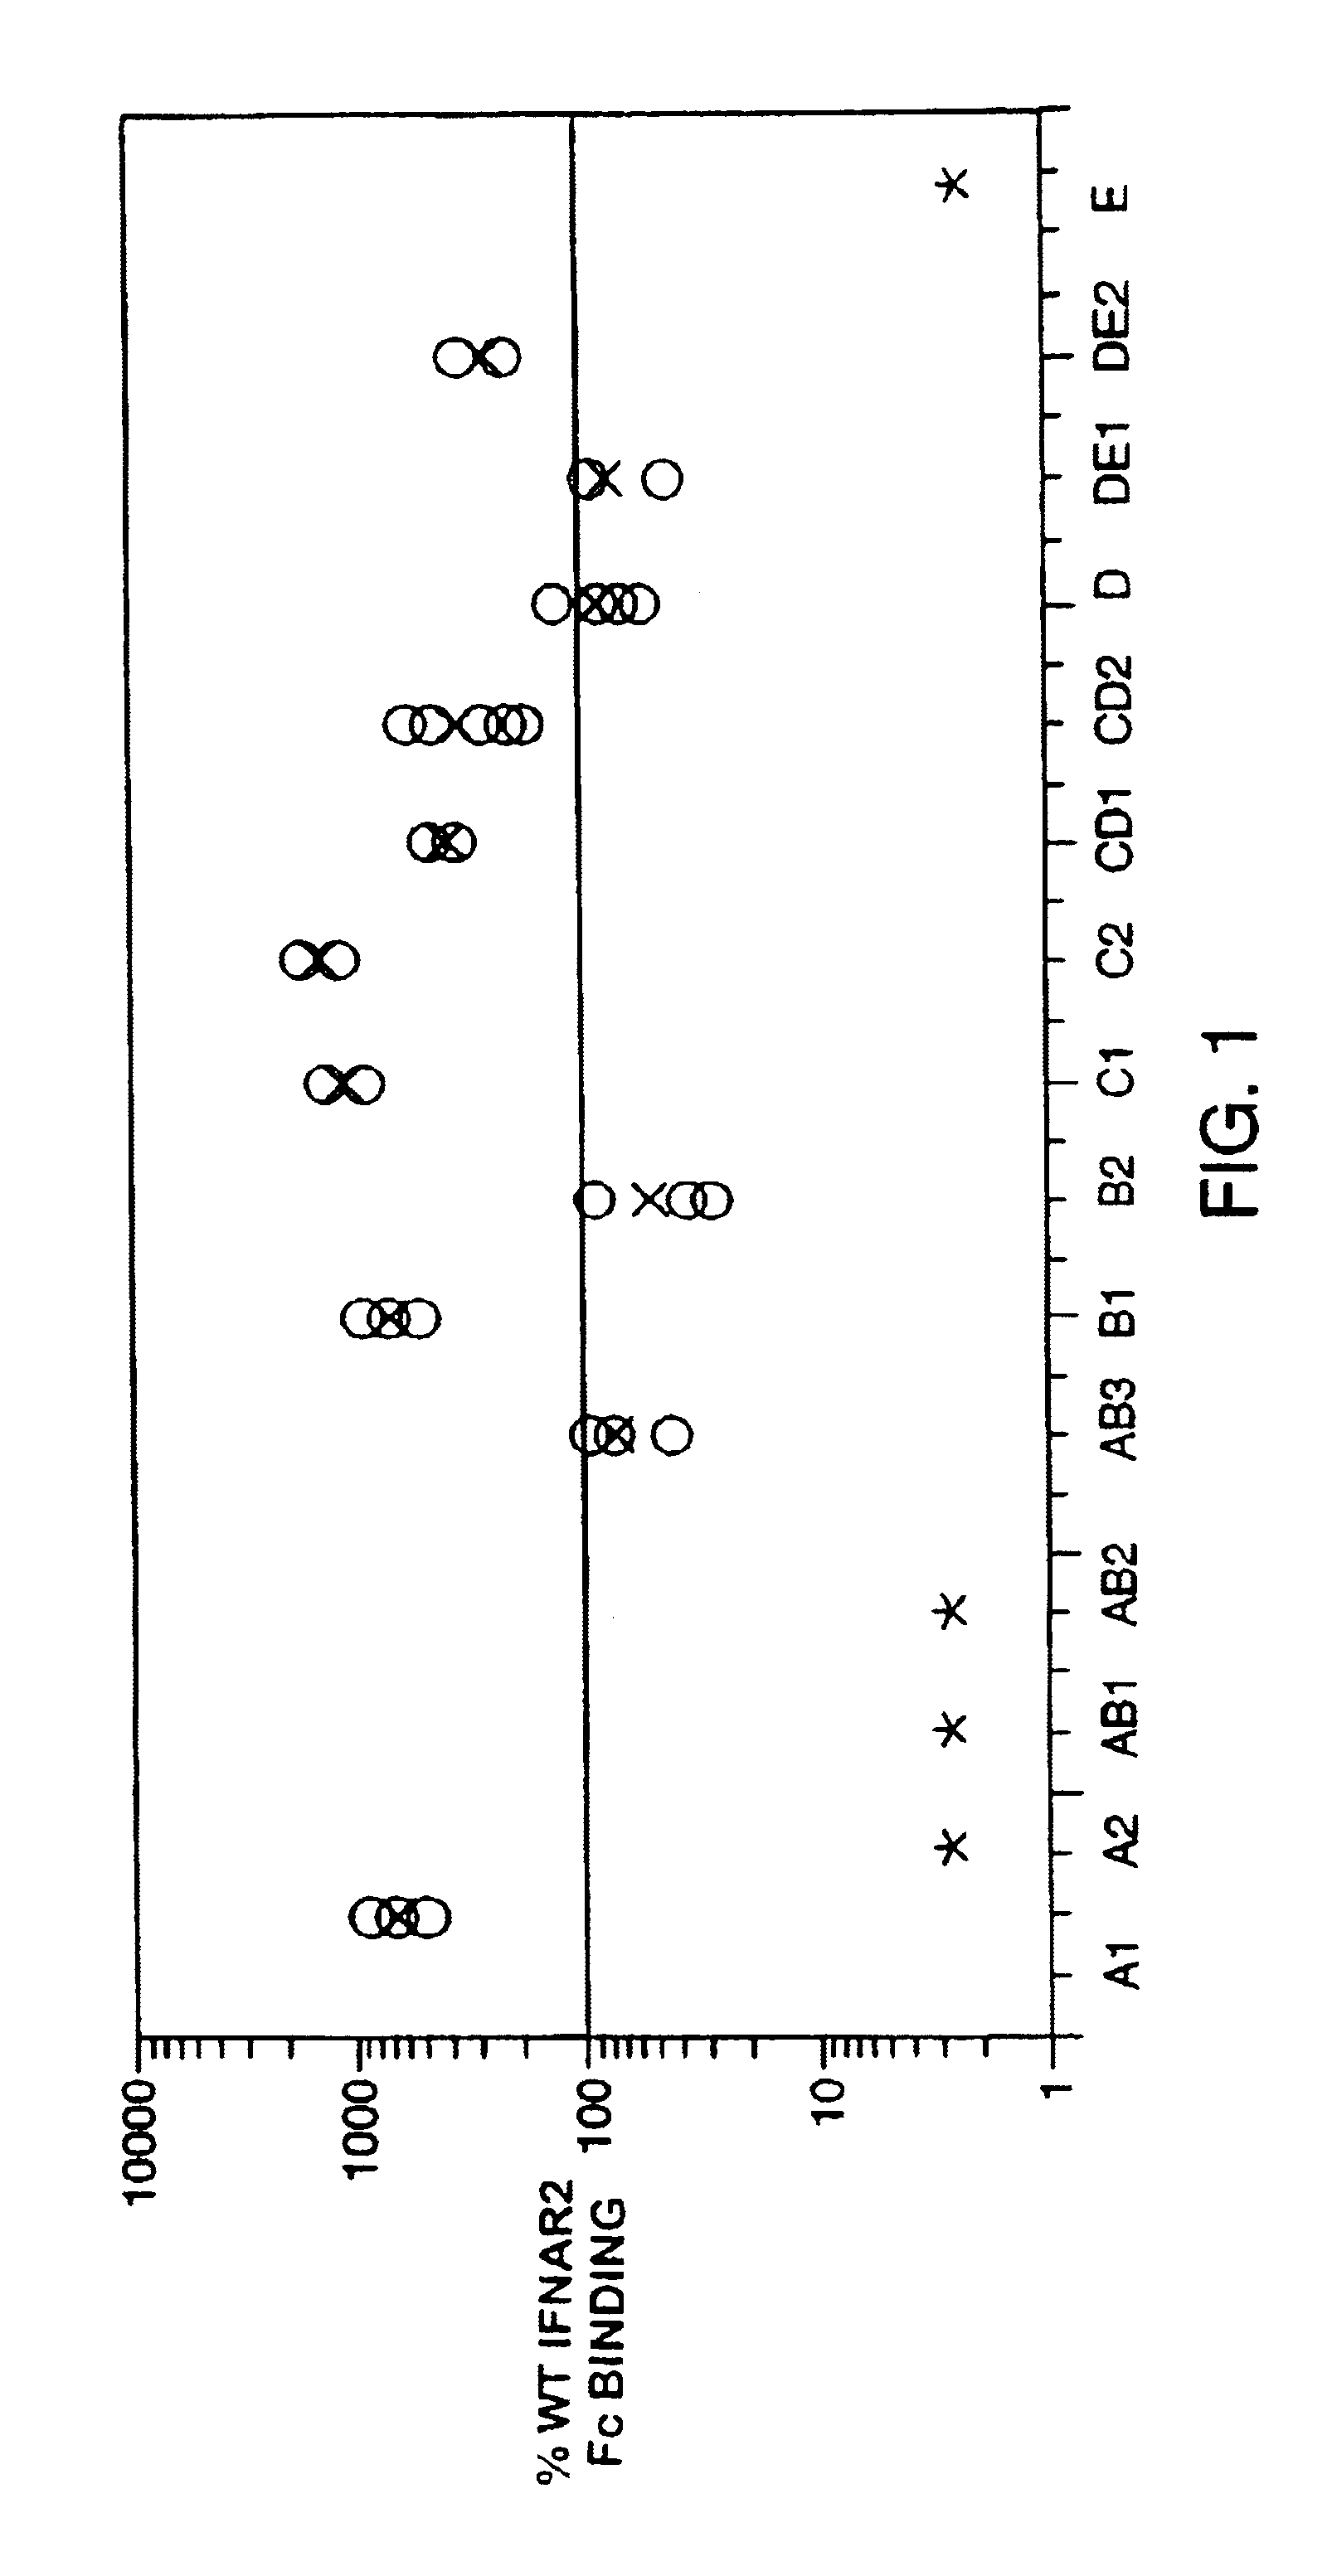 Polymer conjugates of interferon beta-1a and uses